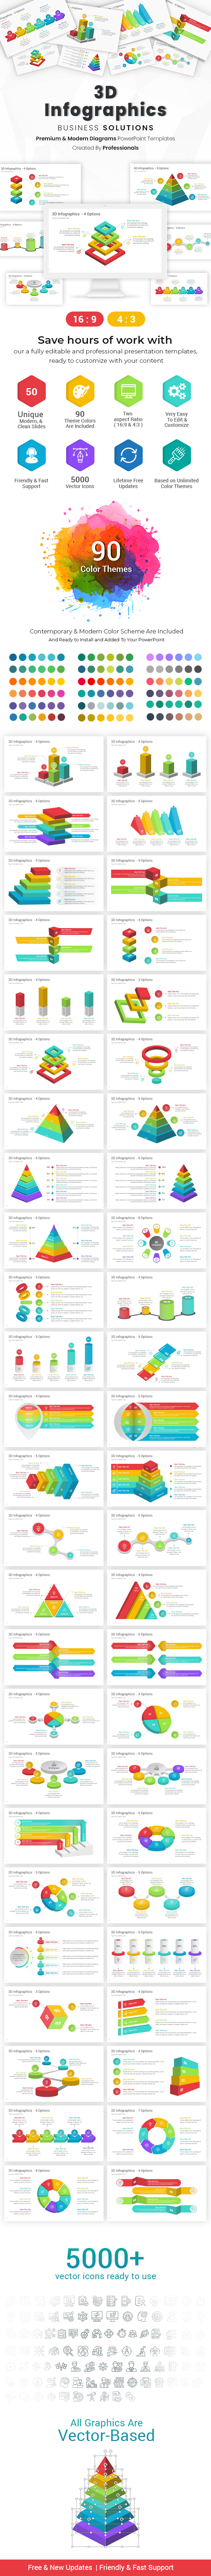 3D Infographics PowerPoint templates